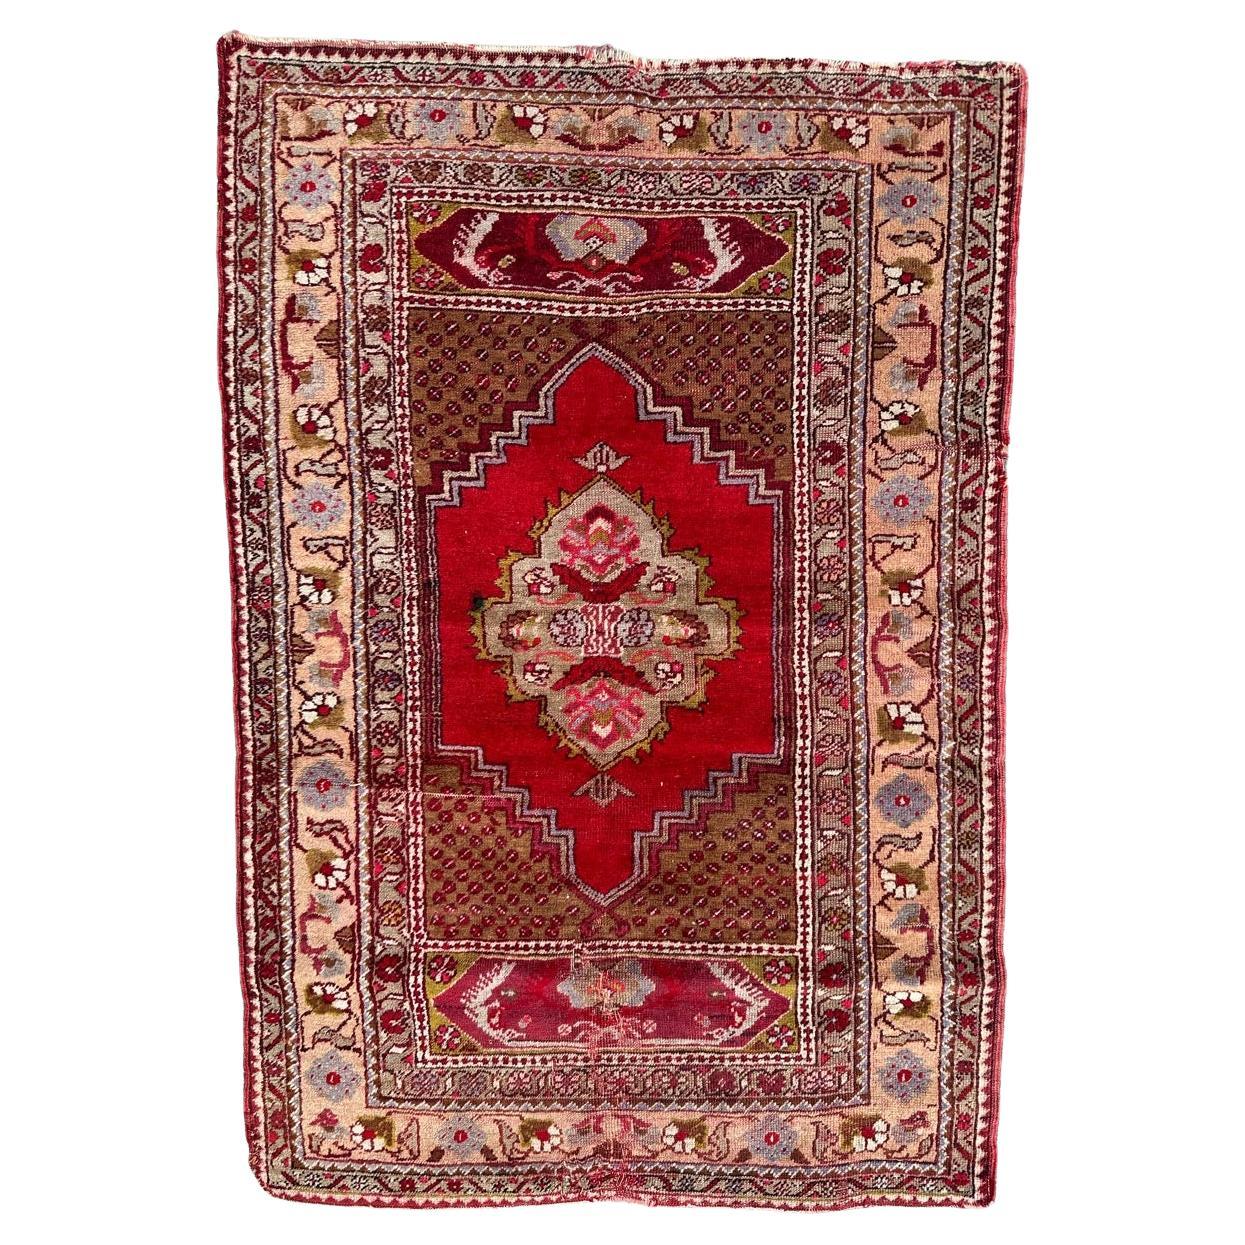 Bobyrug’s nice antique Turkish rug